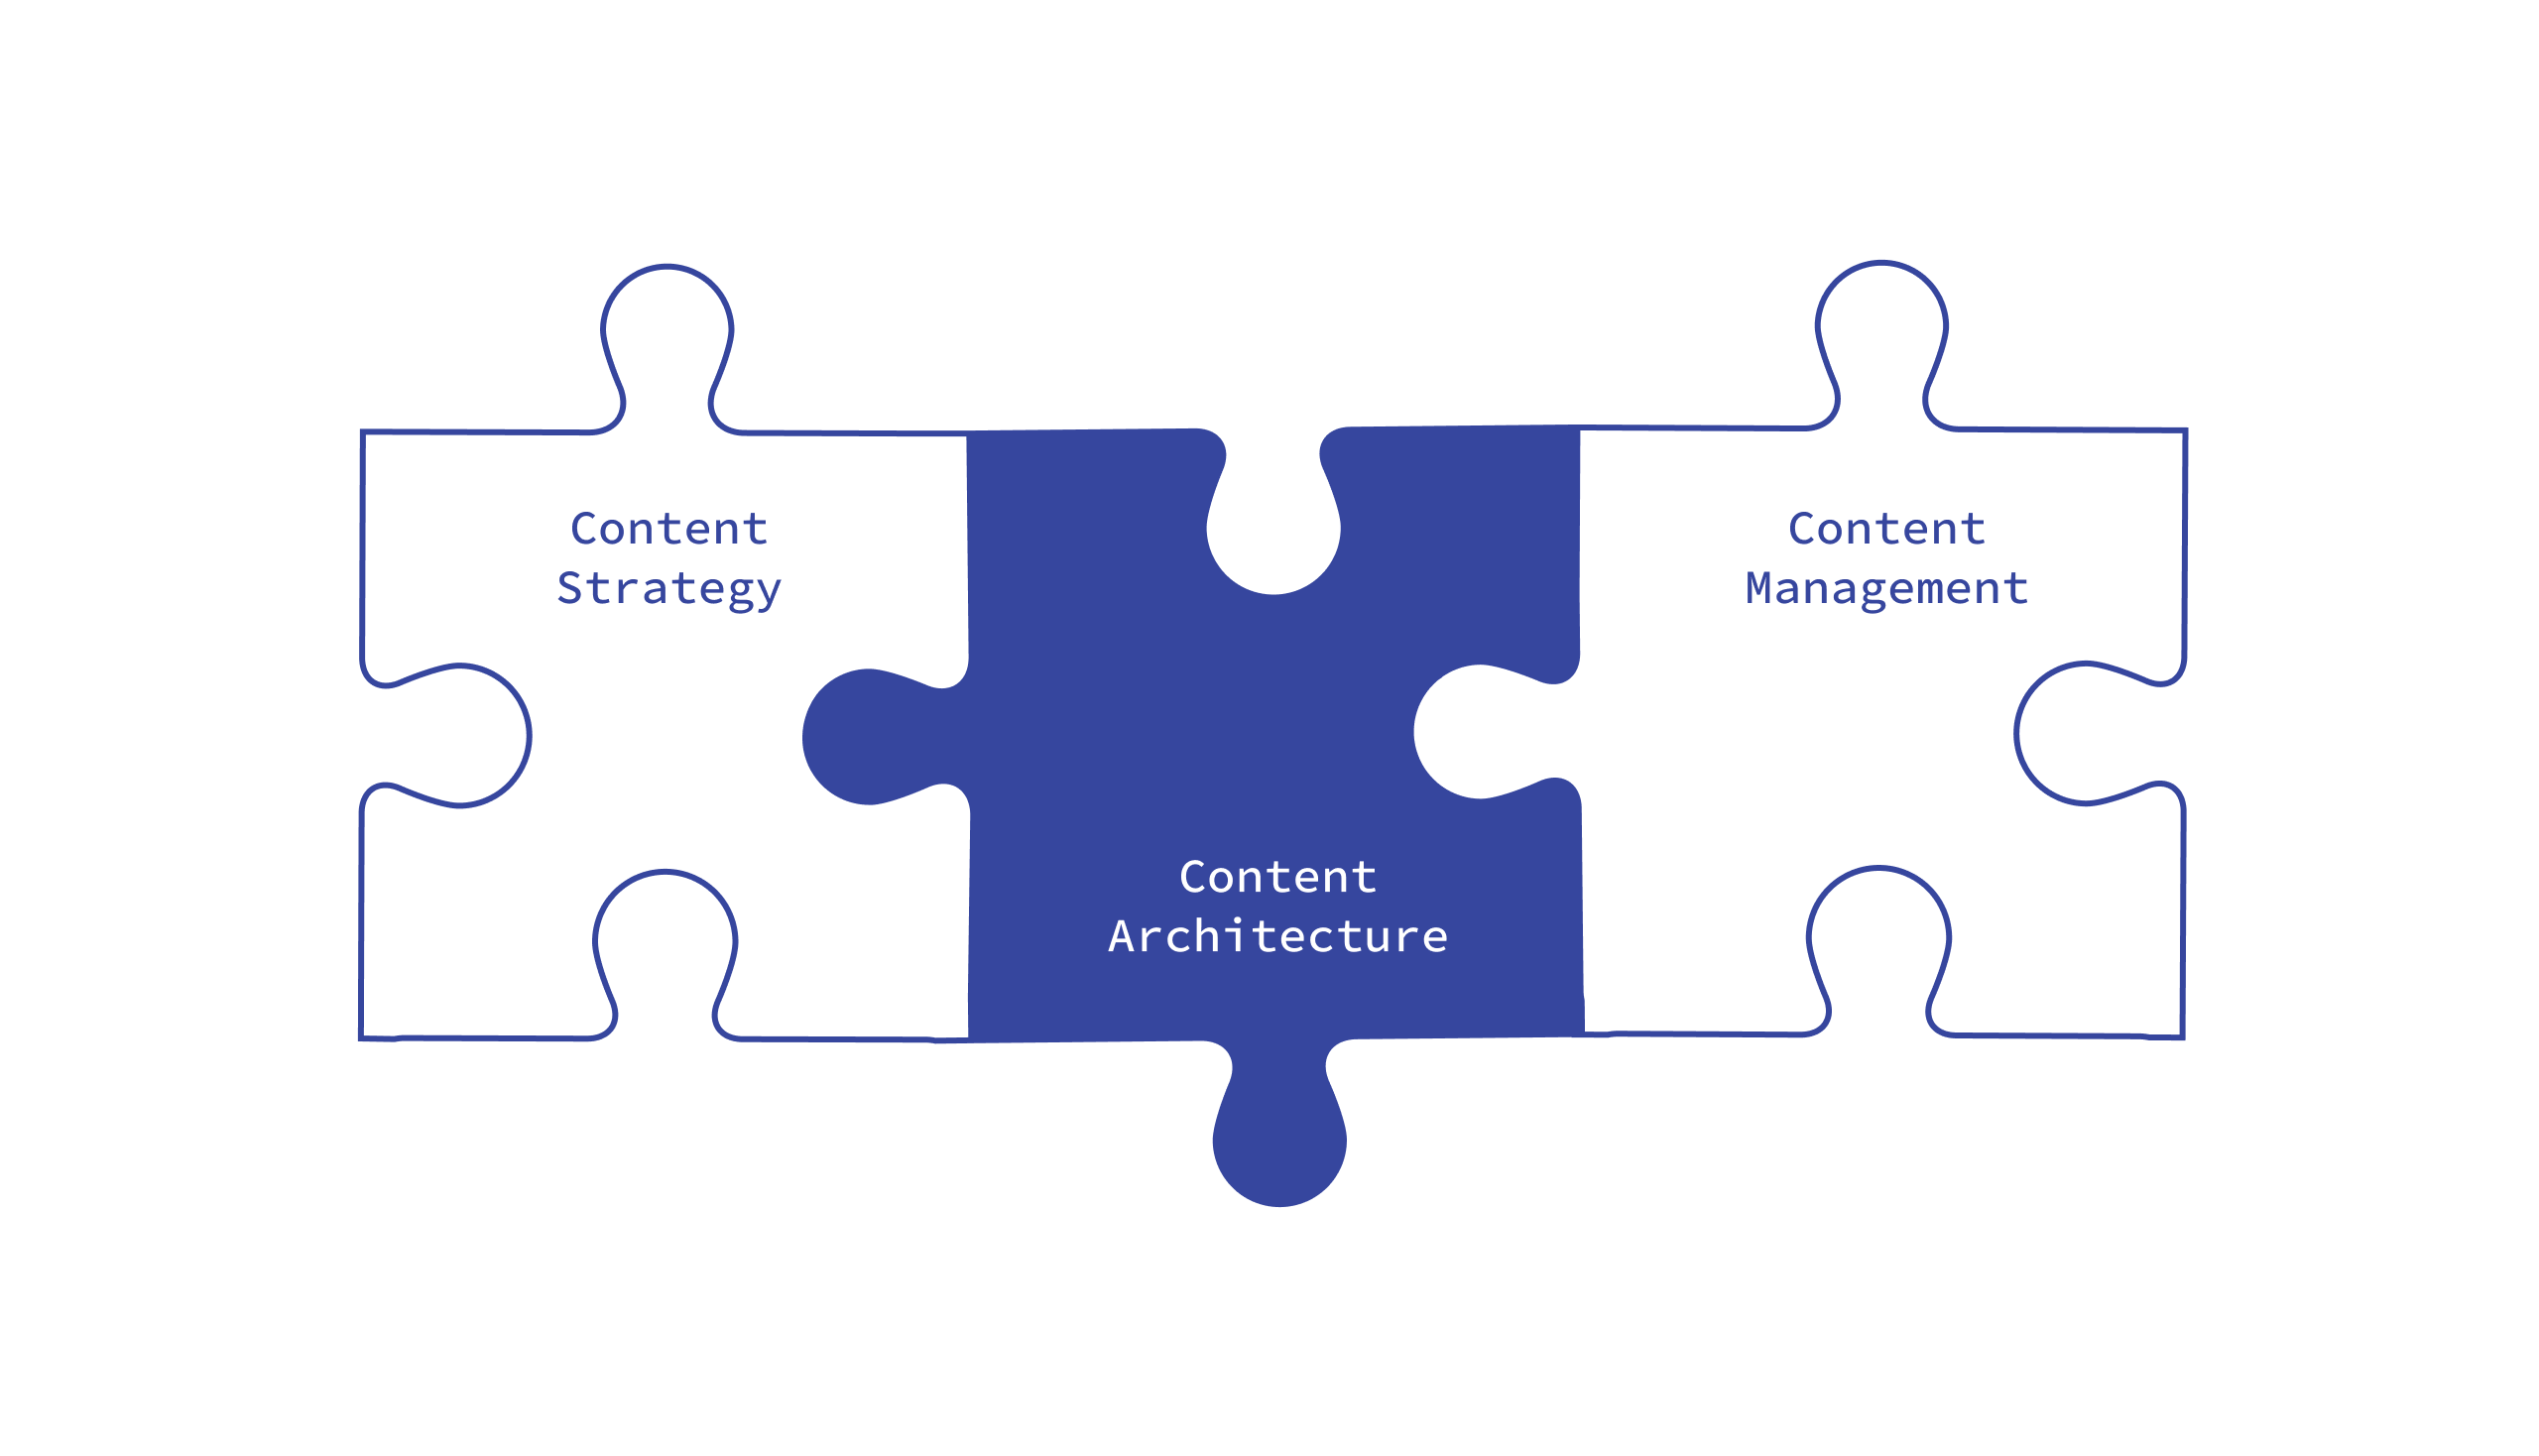 Content Architecture